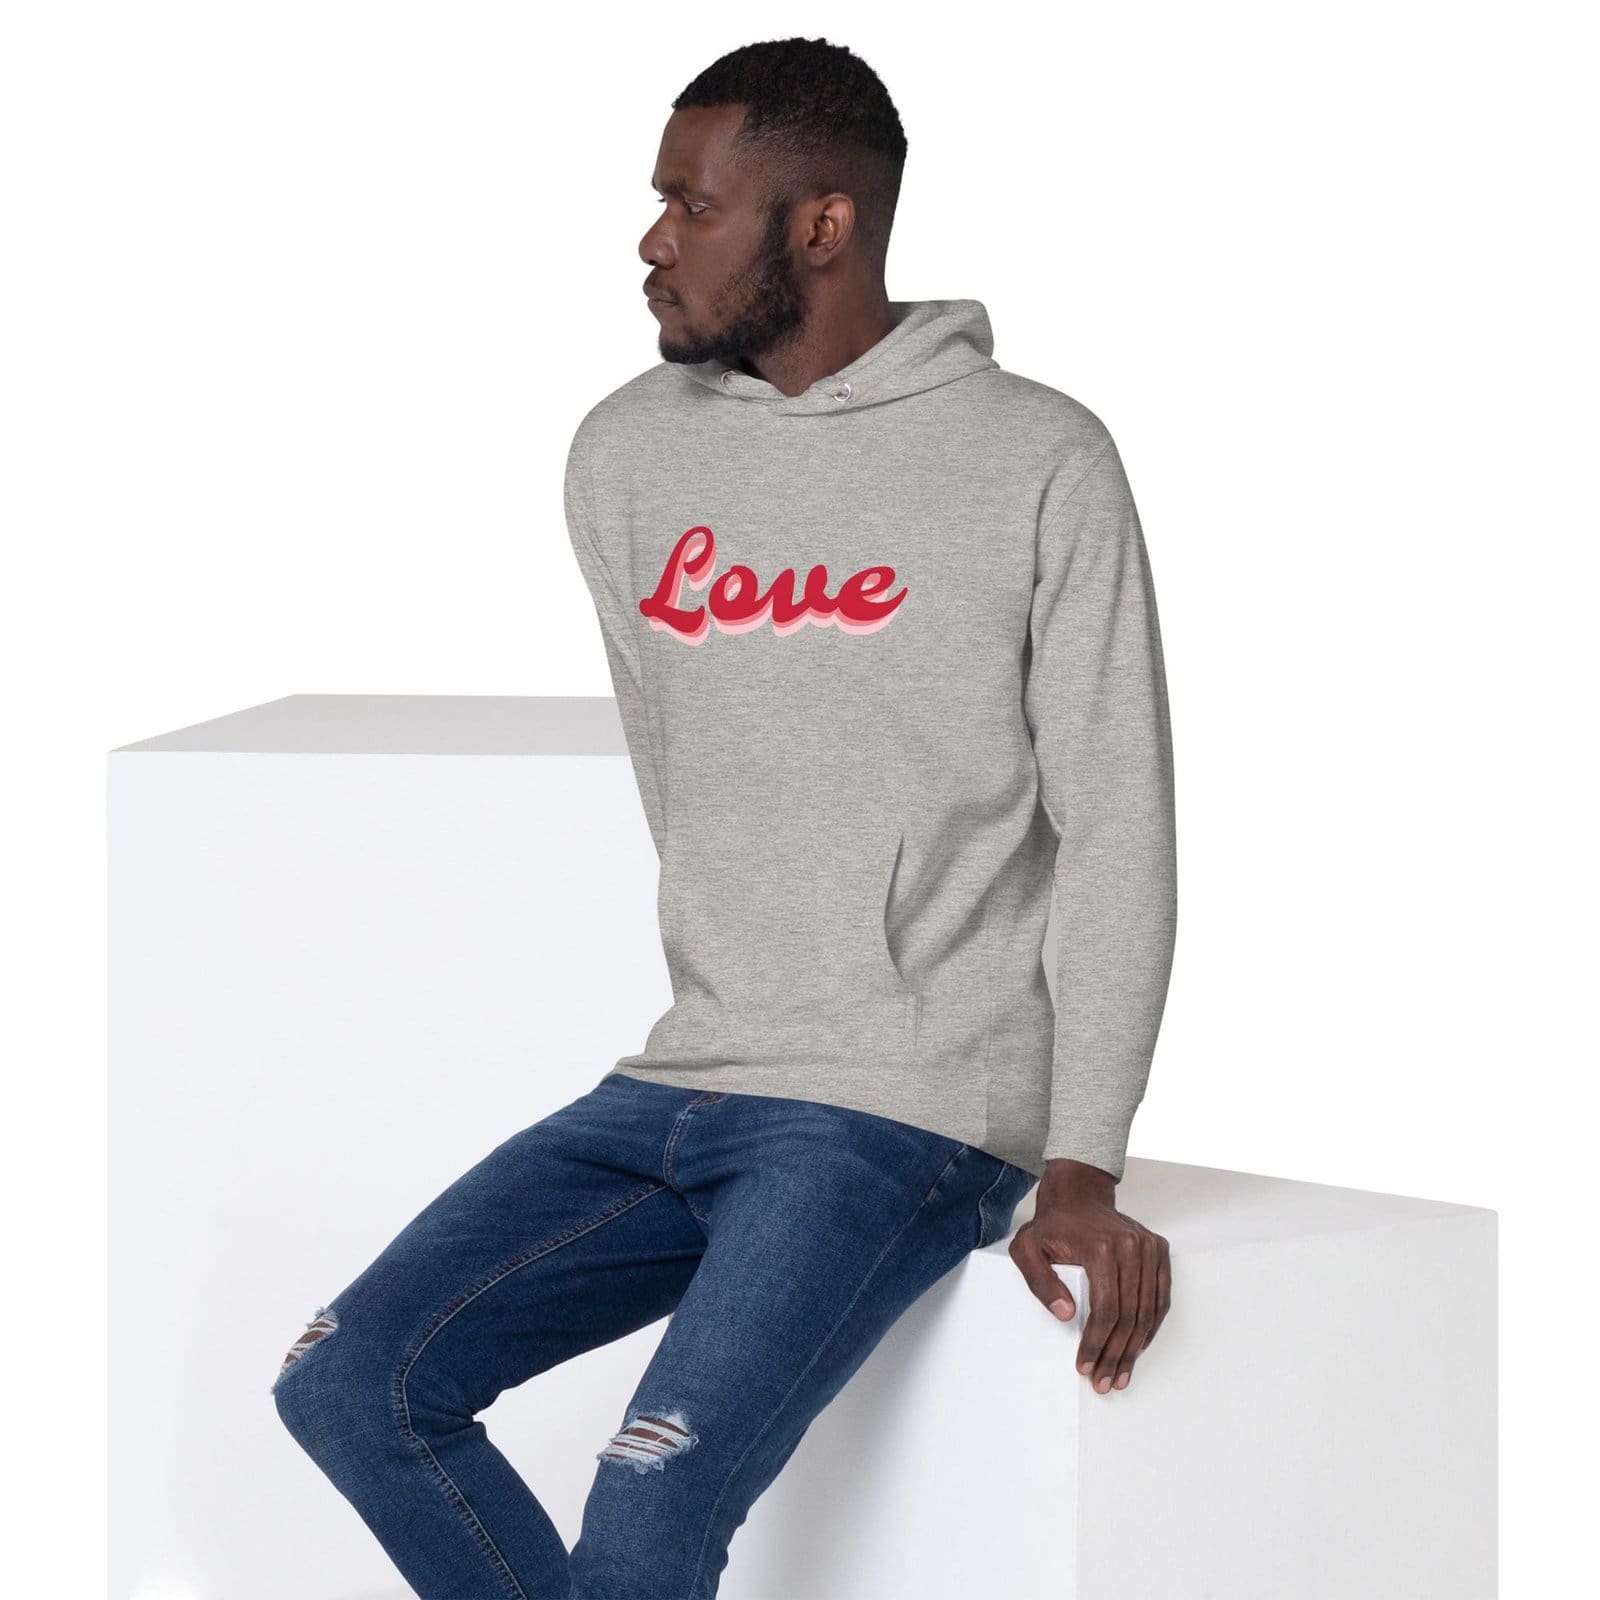 unisex-premium-hoodie-carbon-grey-left-front-6521a03ca2a1c.jpg